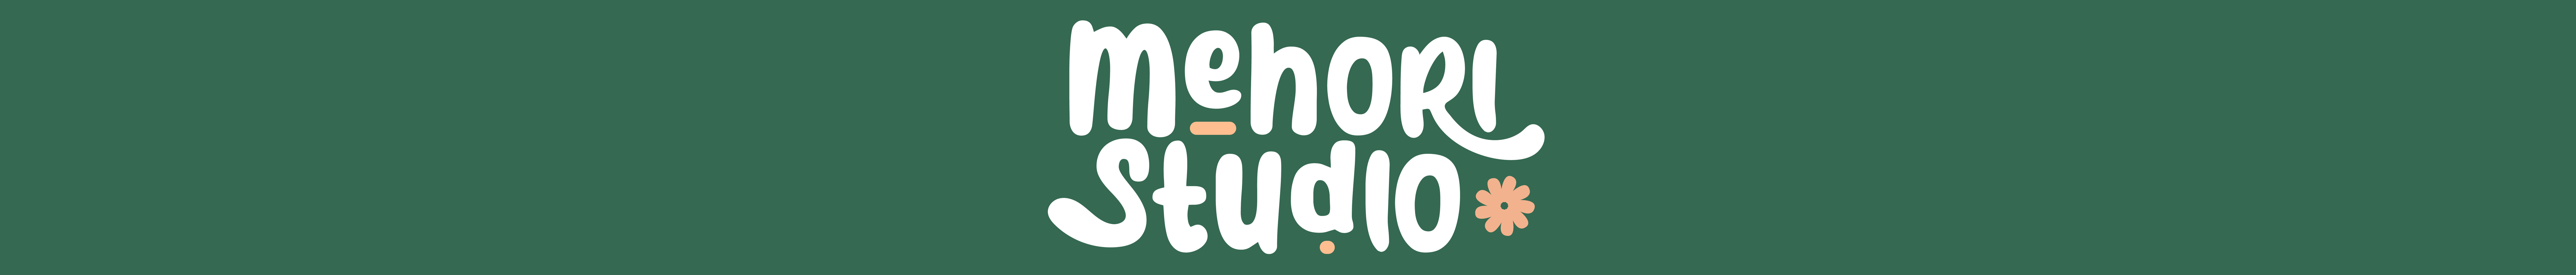 Mehori Studios profilbanner